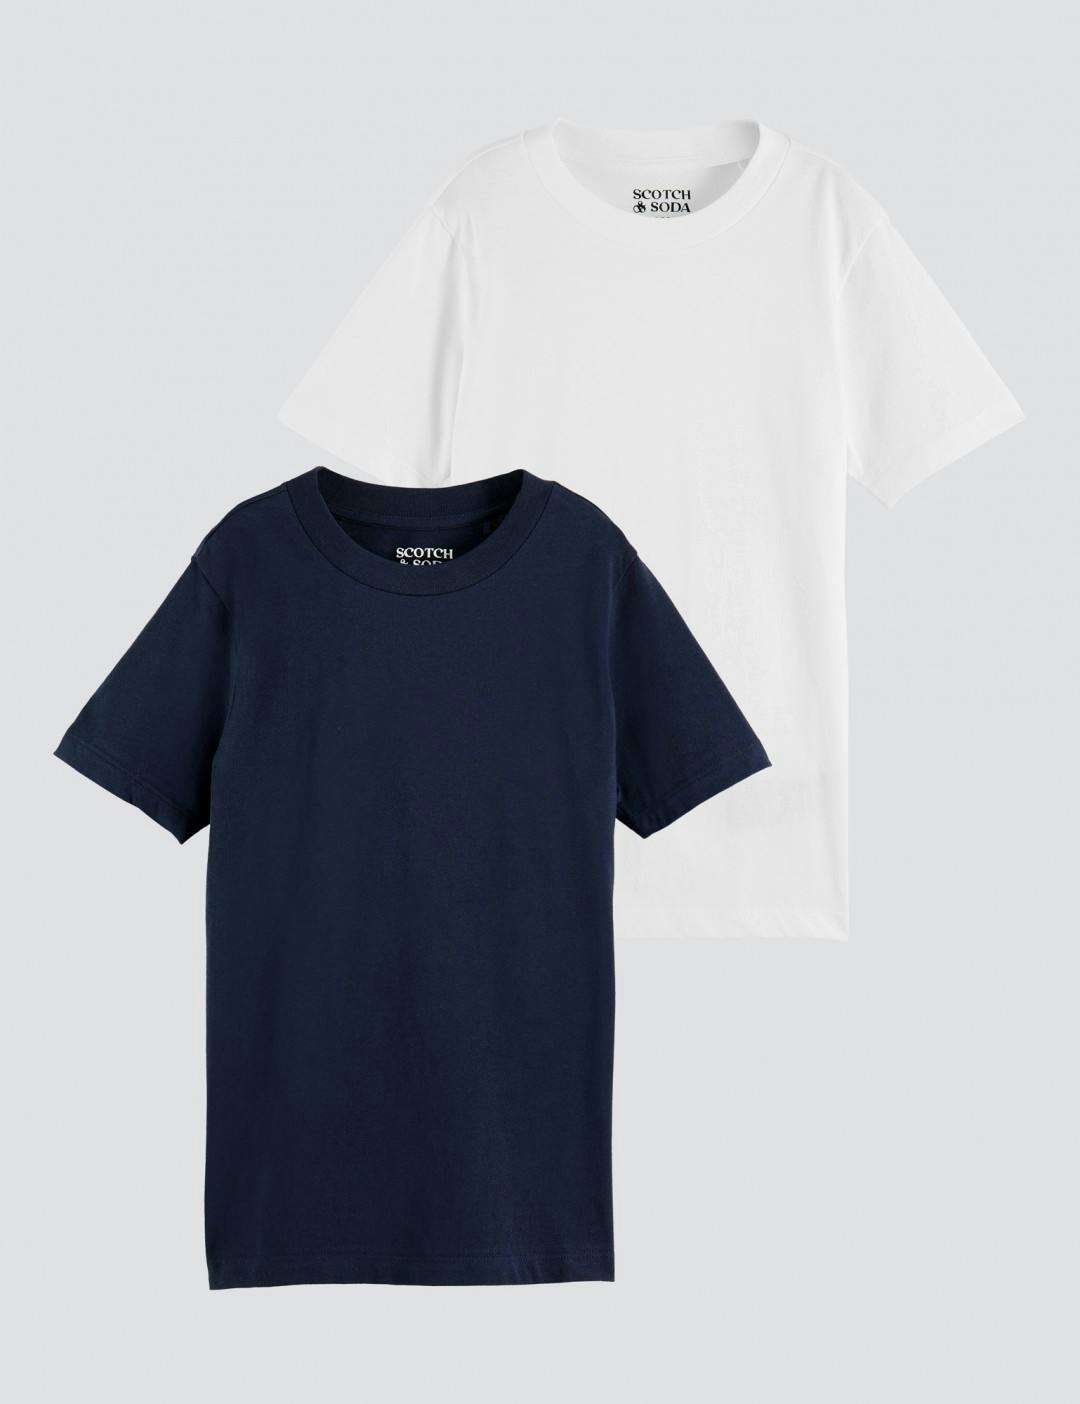 Duo pack T-shirt in Organic Cotton